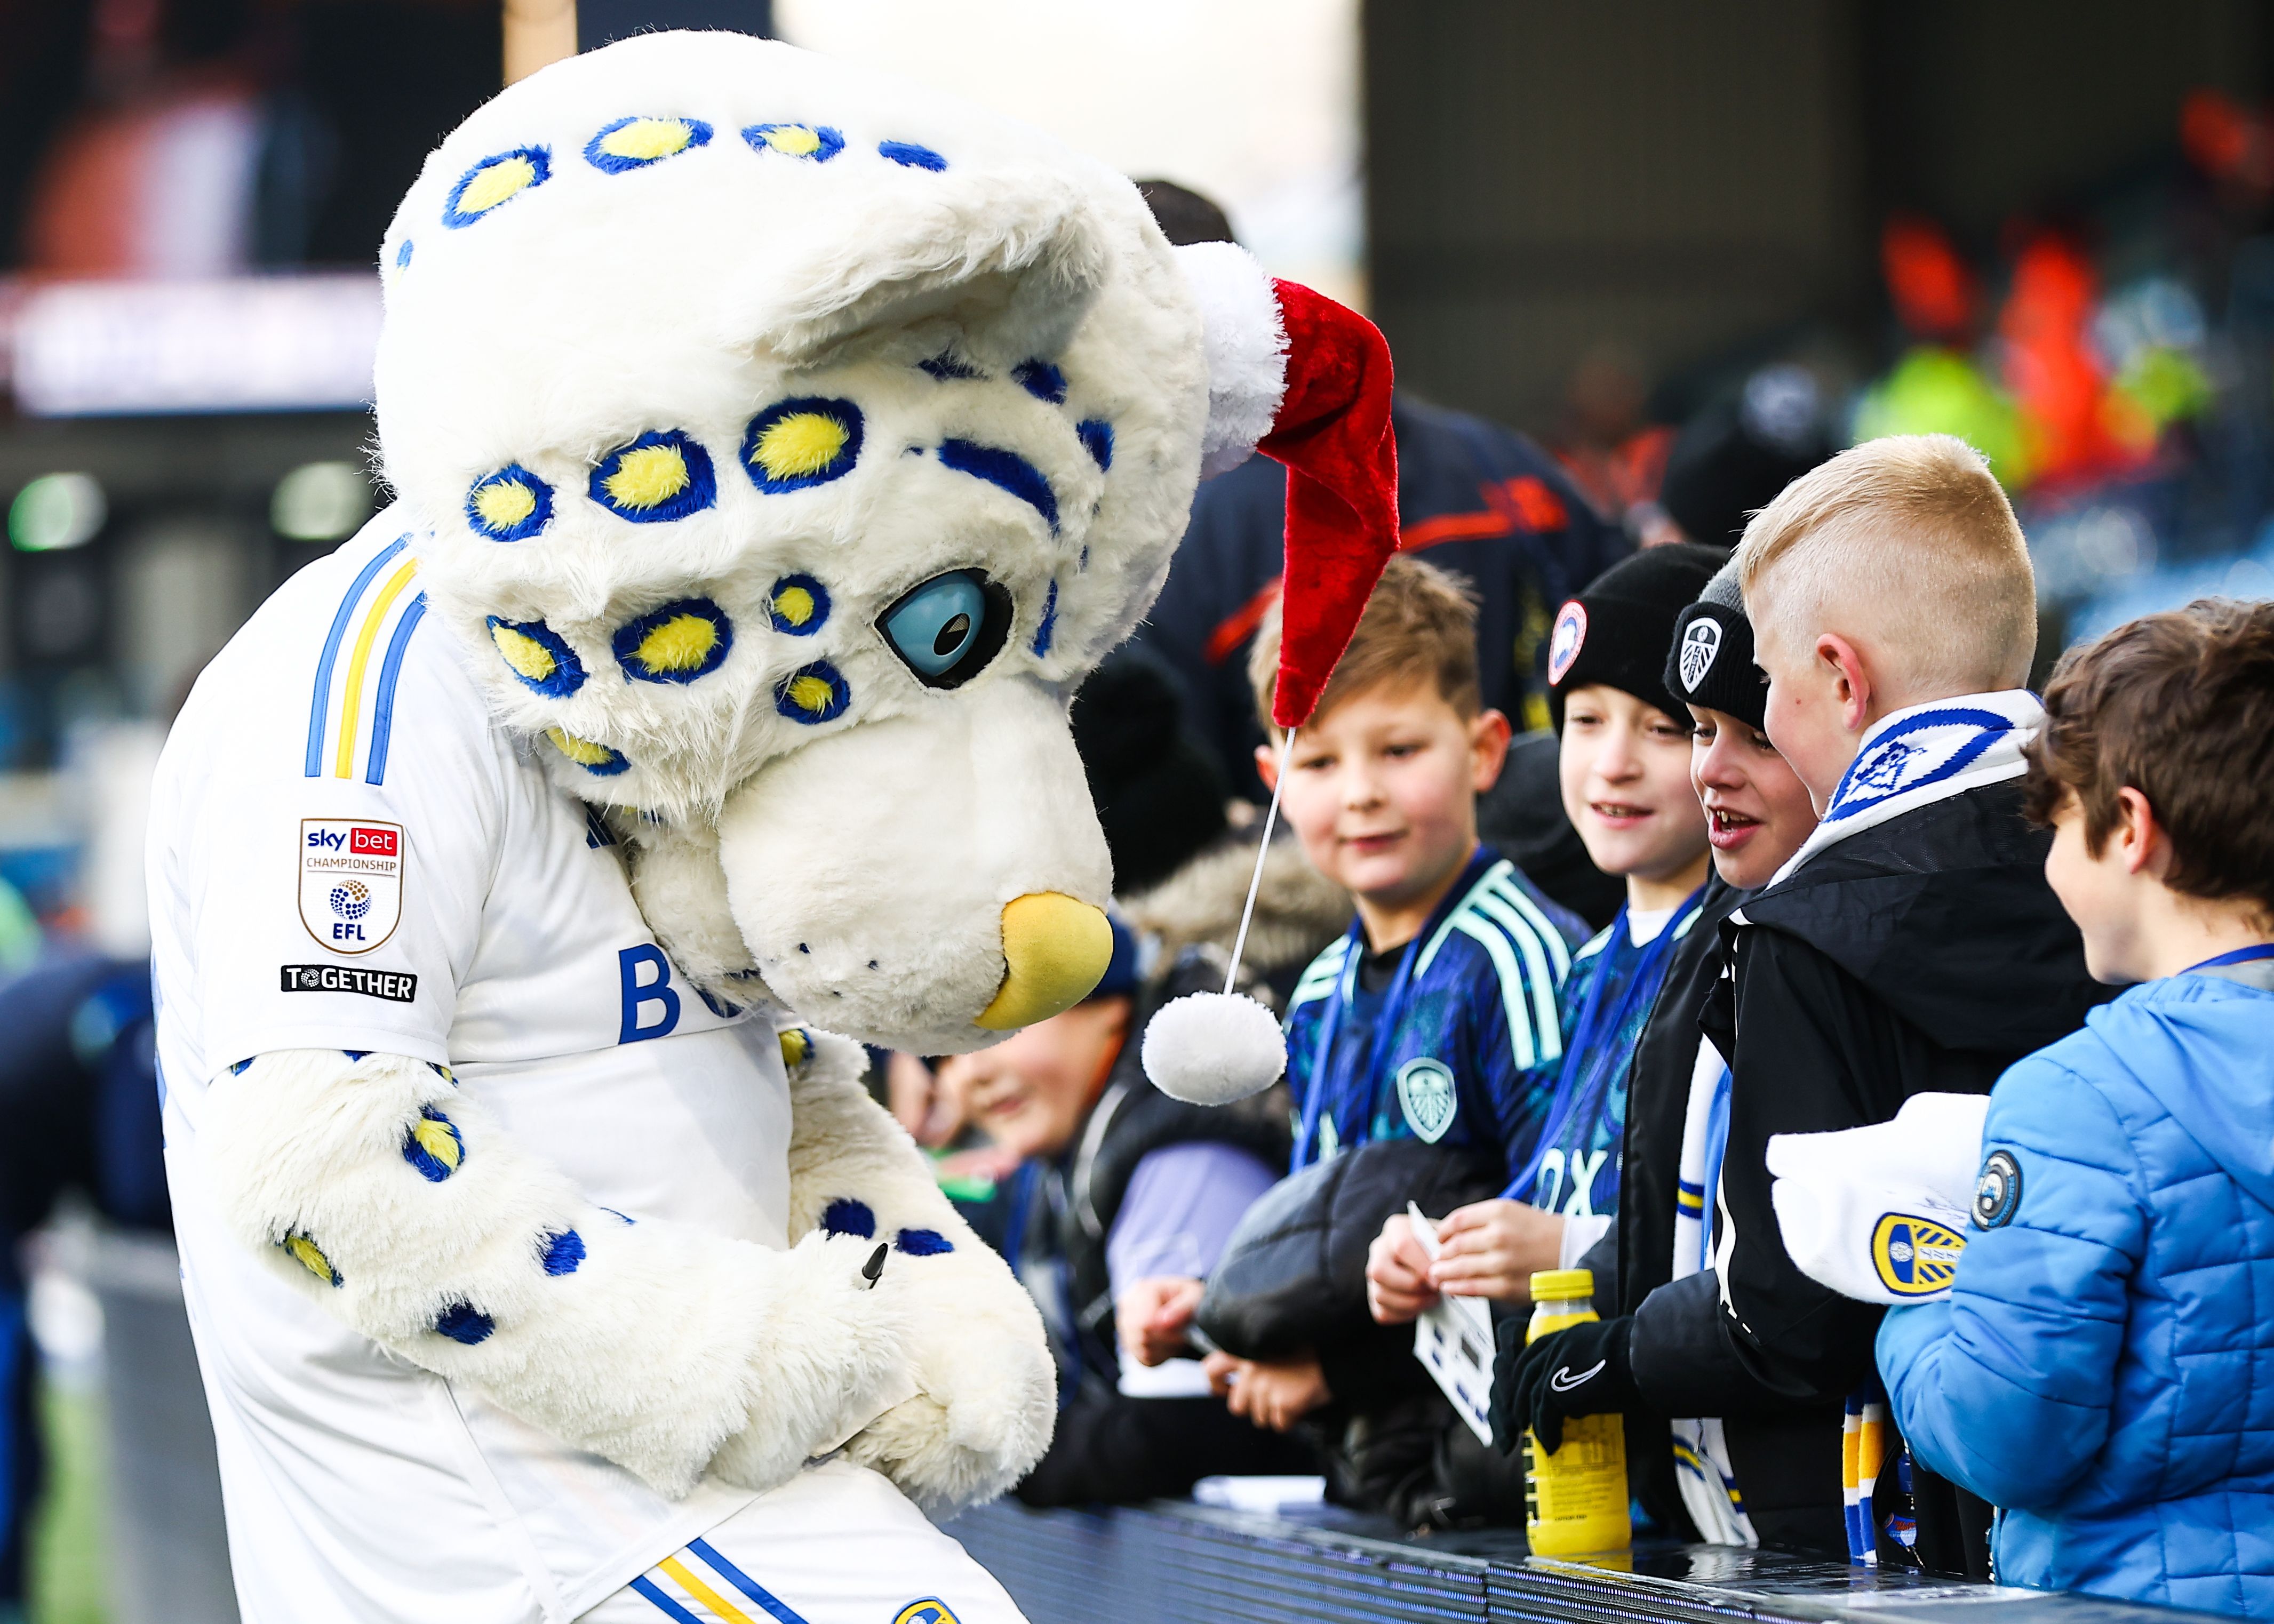 The Leeds United mascot signing autographs